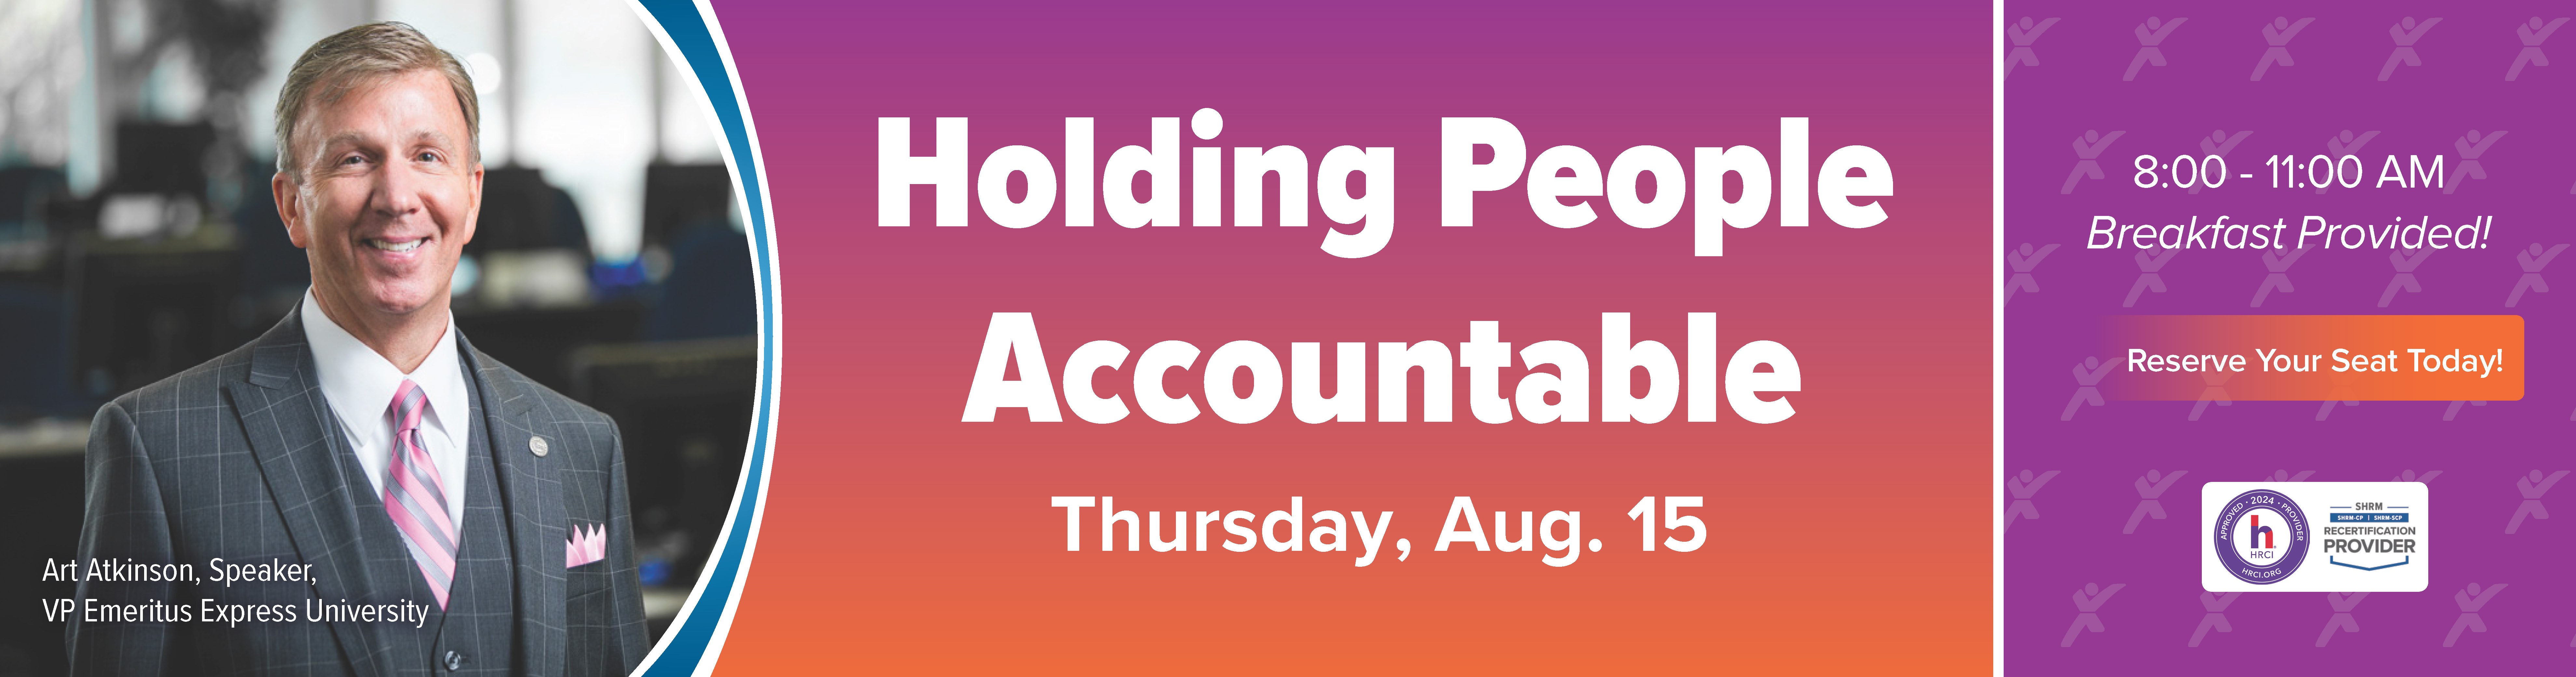 Holding People Accountable - Art Atkinson